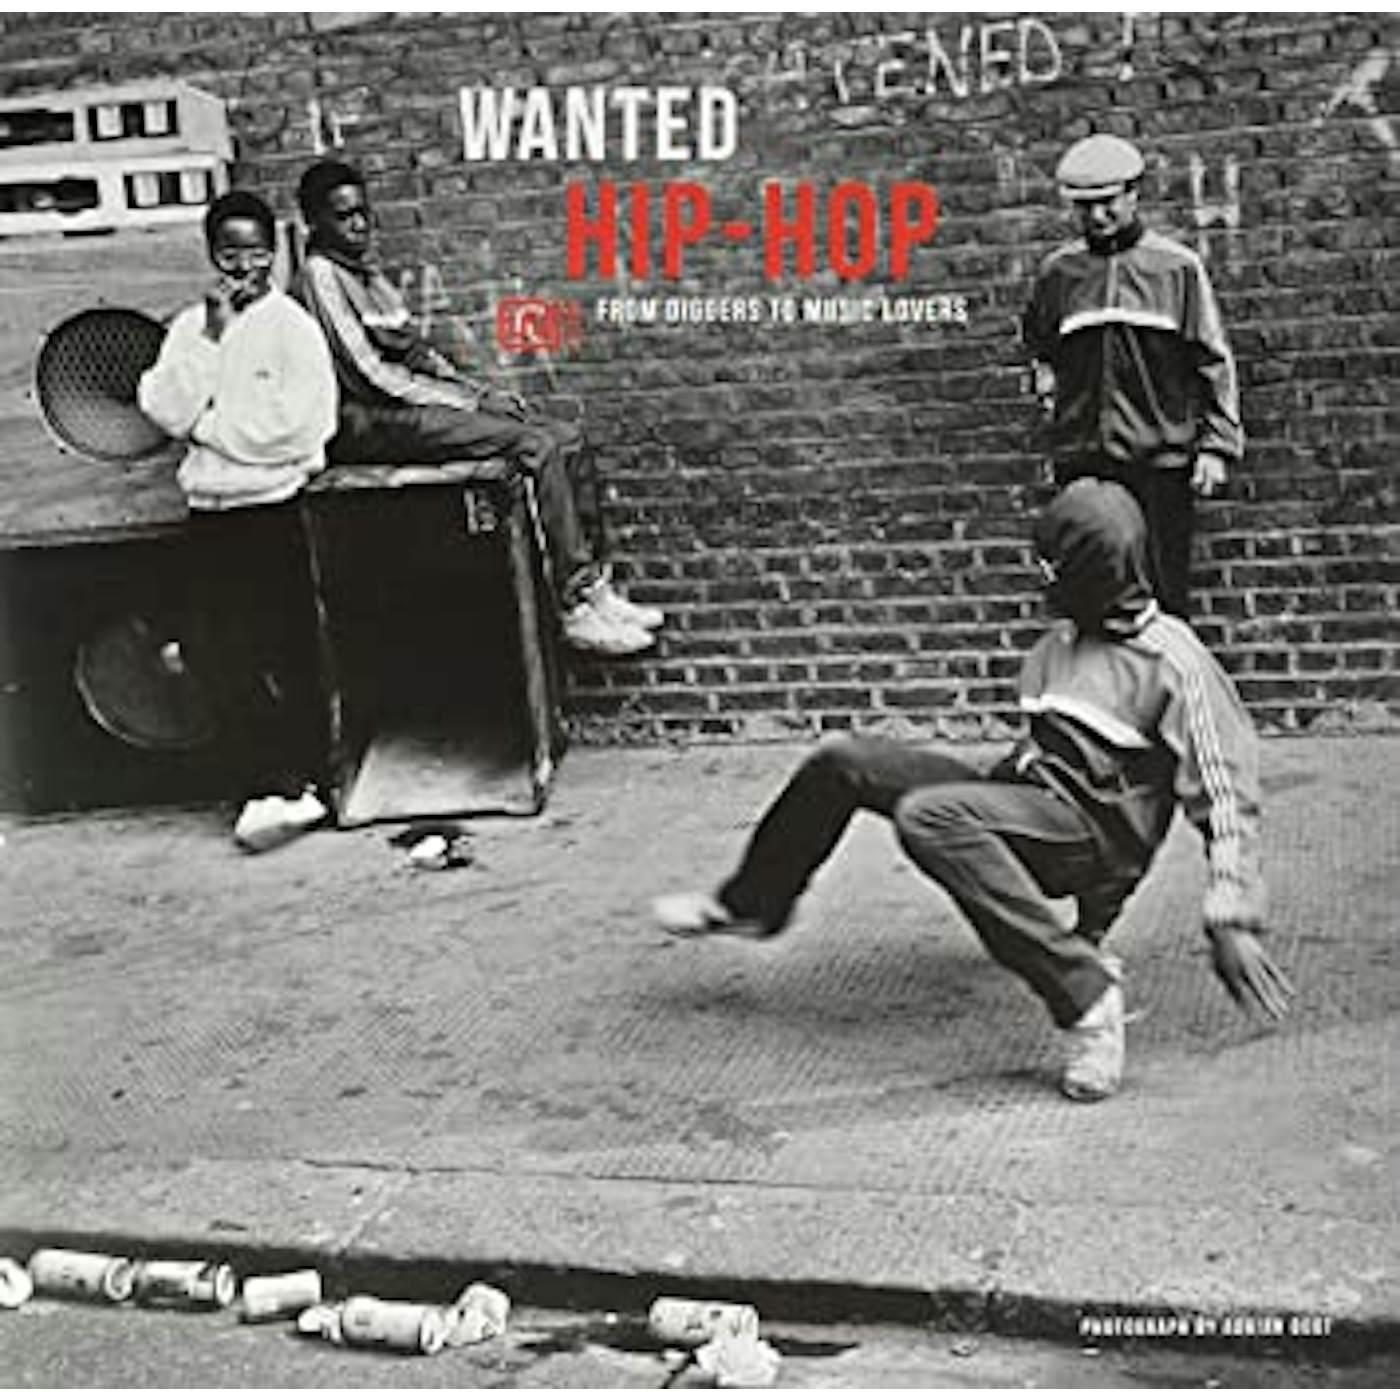 Wanted Hip-hop / Various Vinyl Record